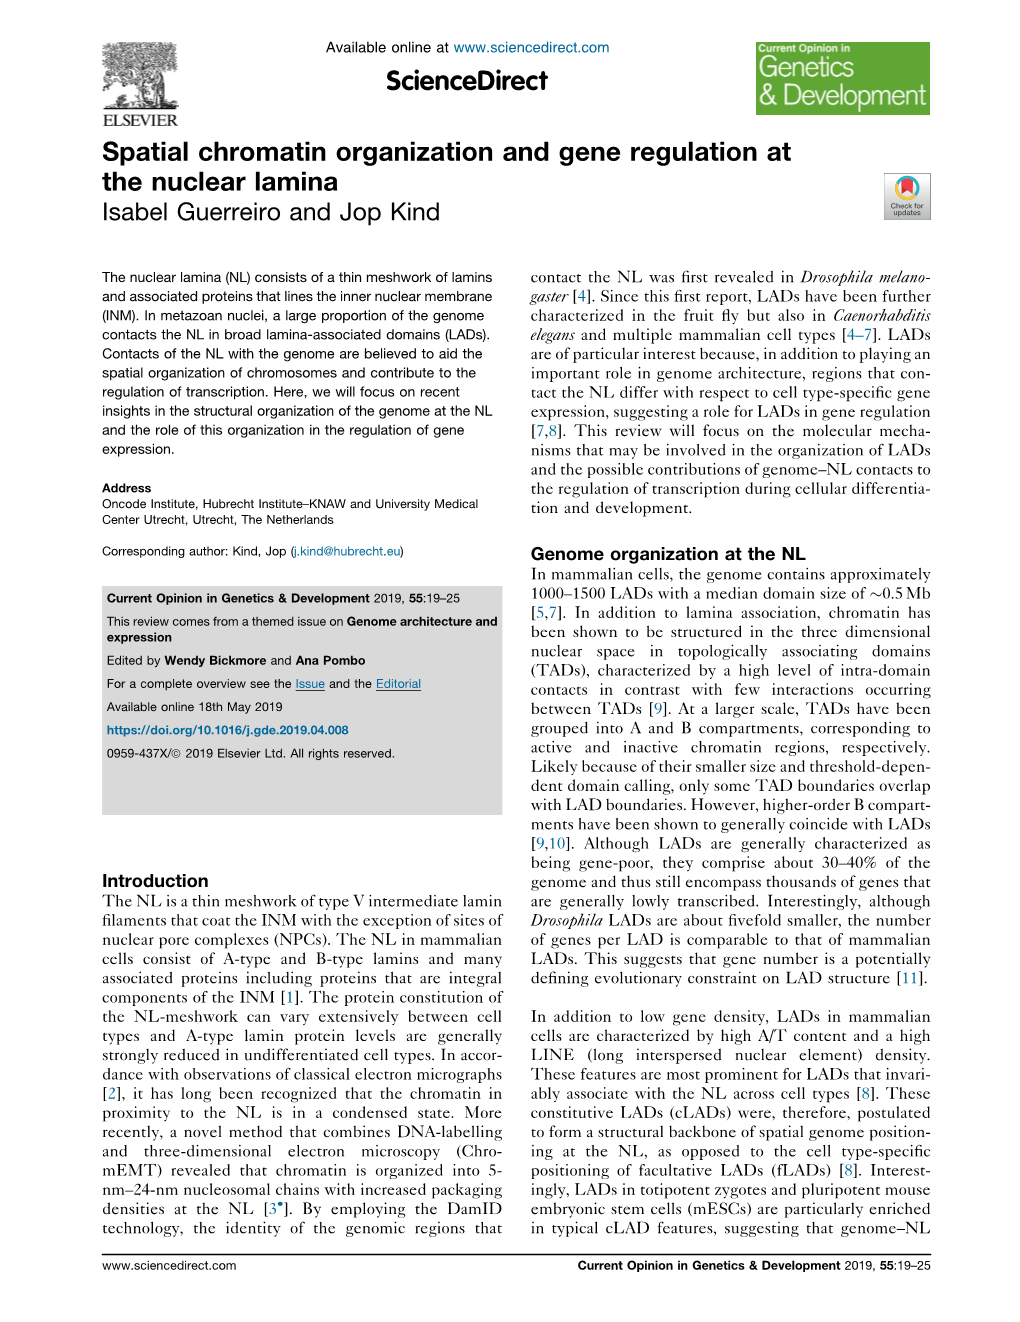 Spatial Chromatin Organization and Gene Regulation at the Nuclear Lamina